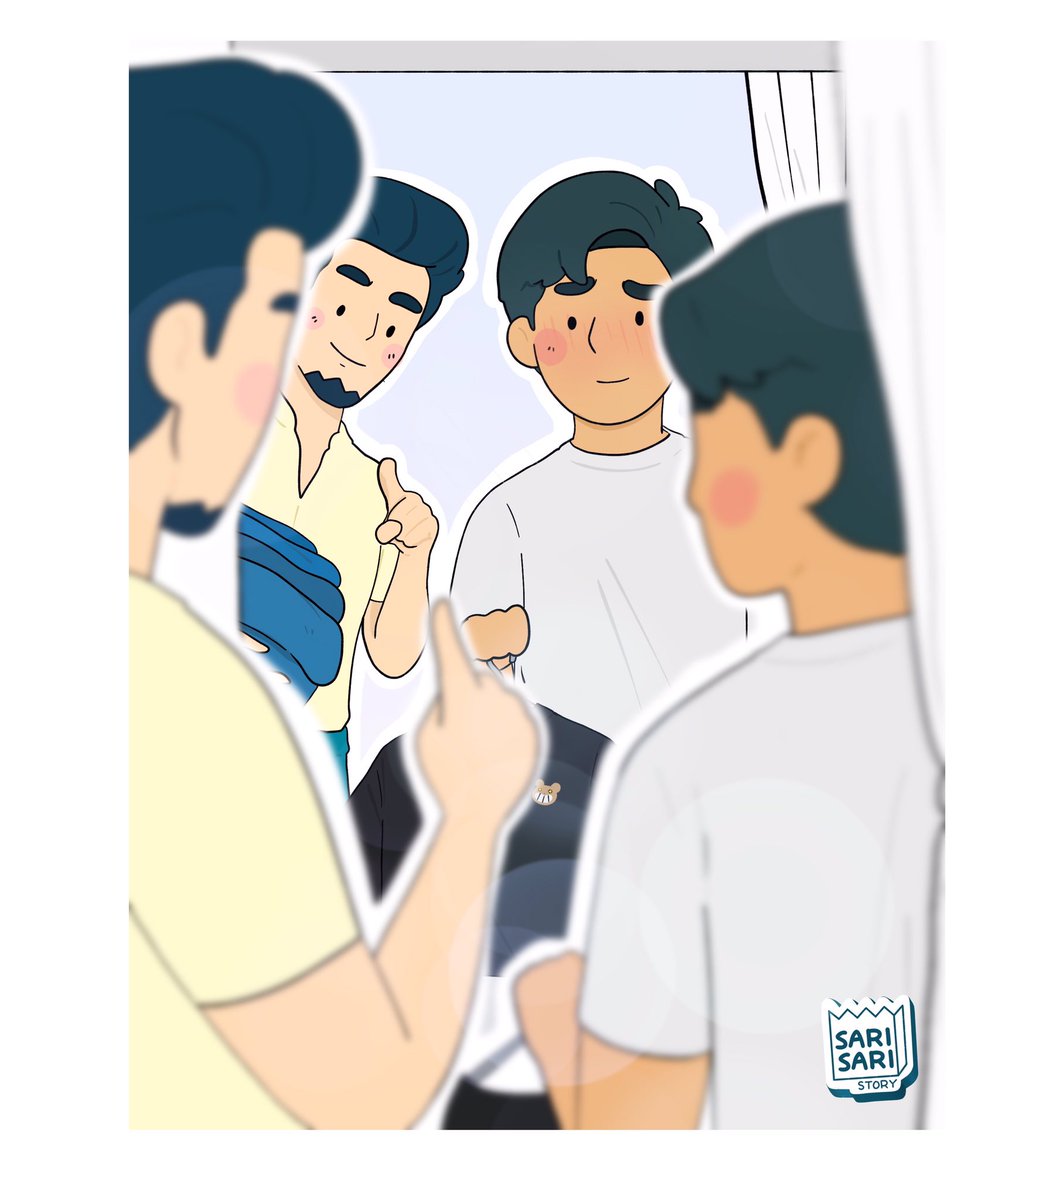 Landian muna sa fitting room 👕 
Follow @SarisariStory for more comic 🏳️‍🌈

WEBTOON: 
English: https://t.co/pVERv4iD7r
Filipino : https://t.co/4tV2VRrBOD 